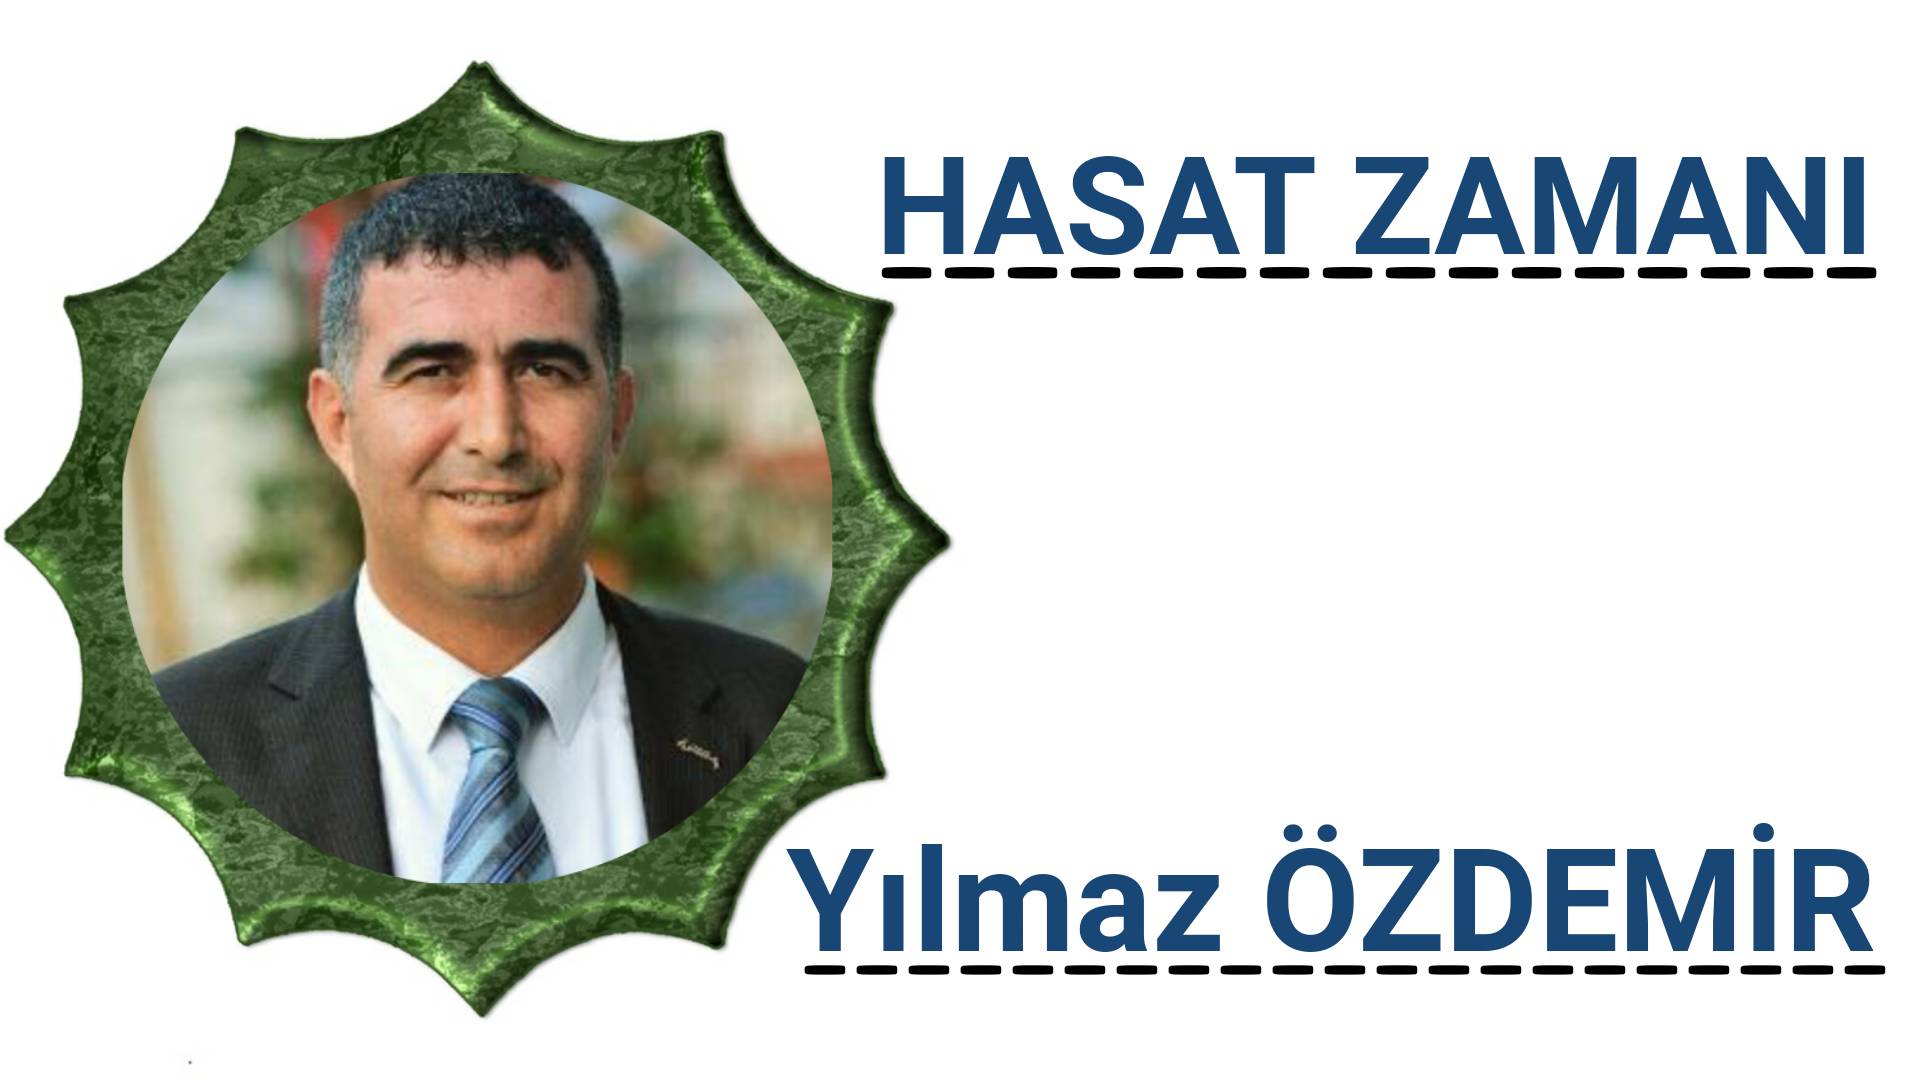 Yilmaz Ozdemir